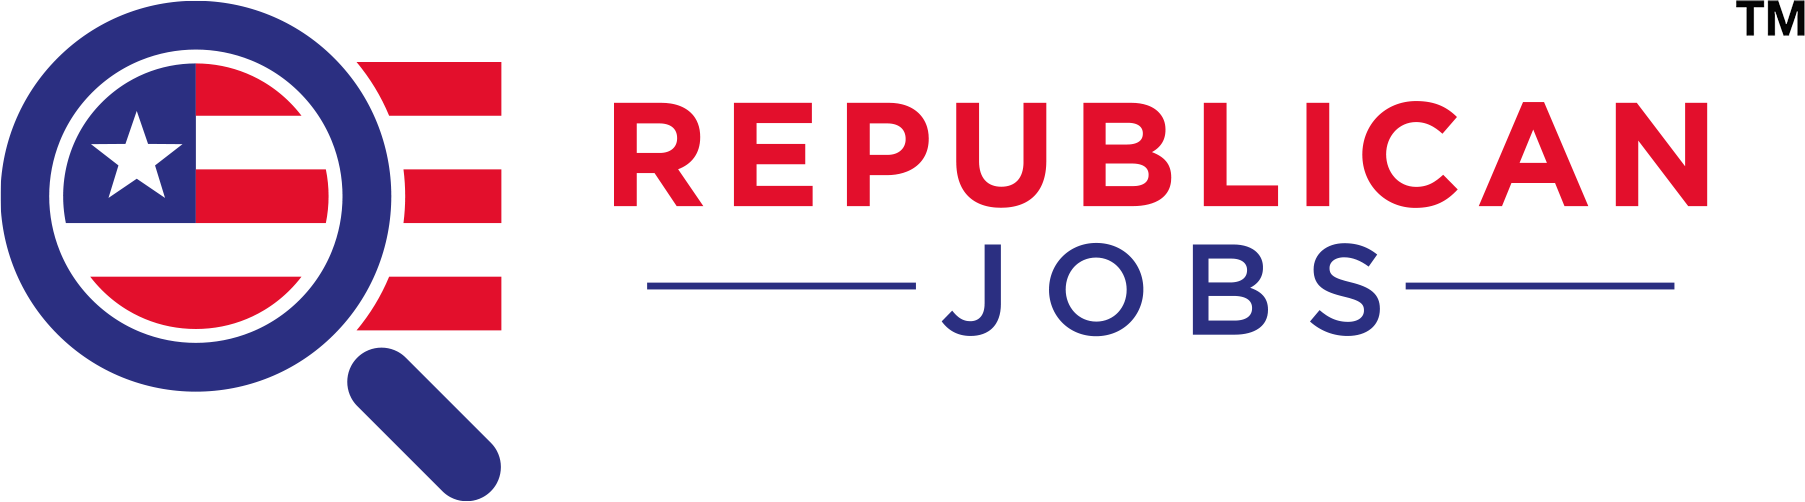 Republican jobs in South Boston Massachusetts jobs